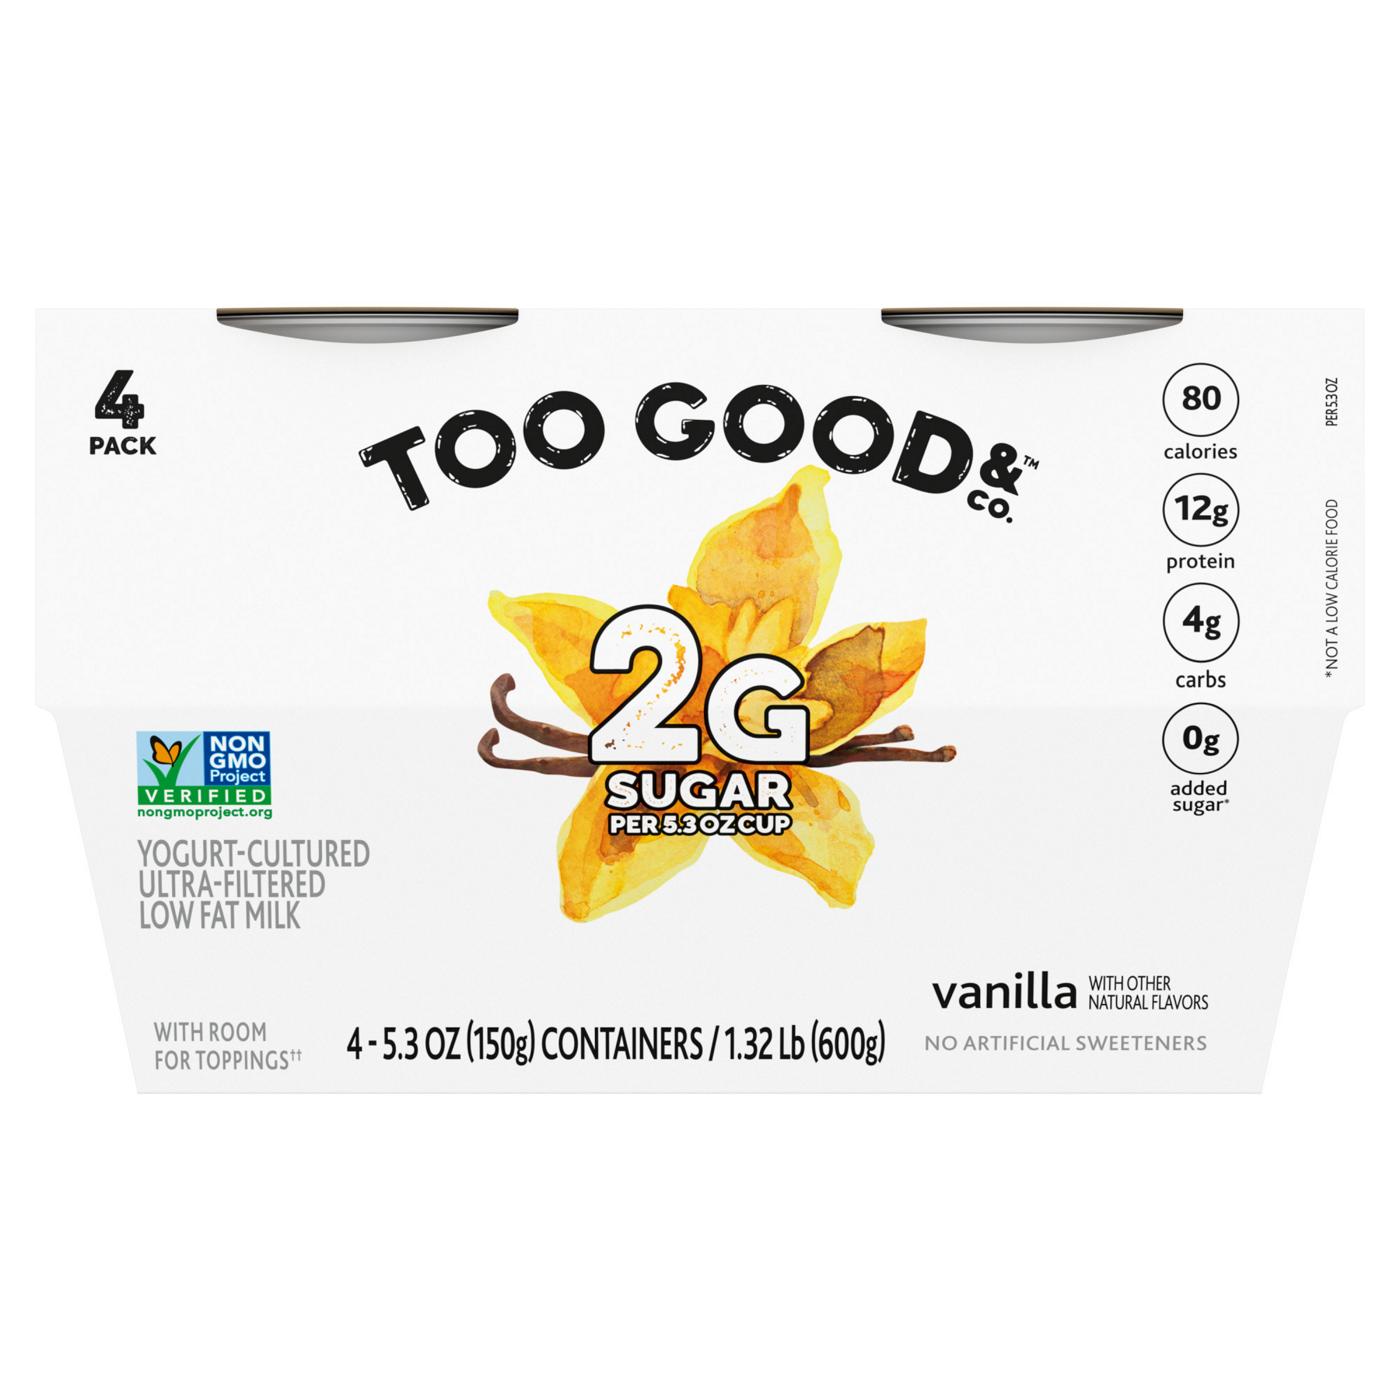 Too Good & Co. Vanilla Flavored Lower Sugar, Low Fat Greek Yogurt Cultured Product; image 1 of 2